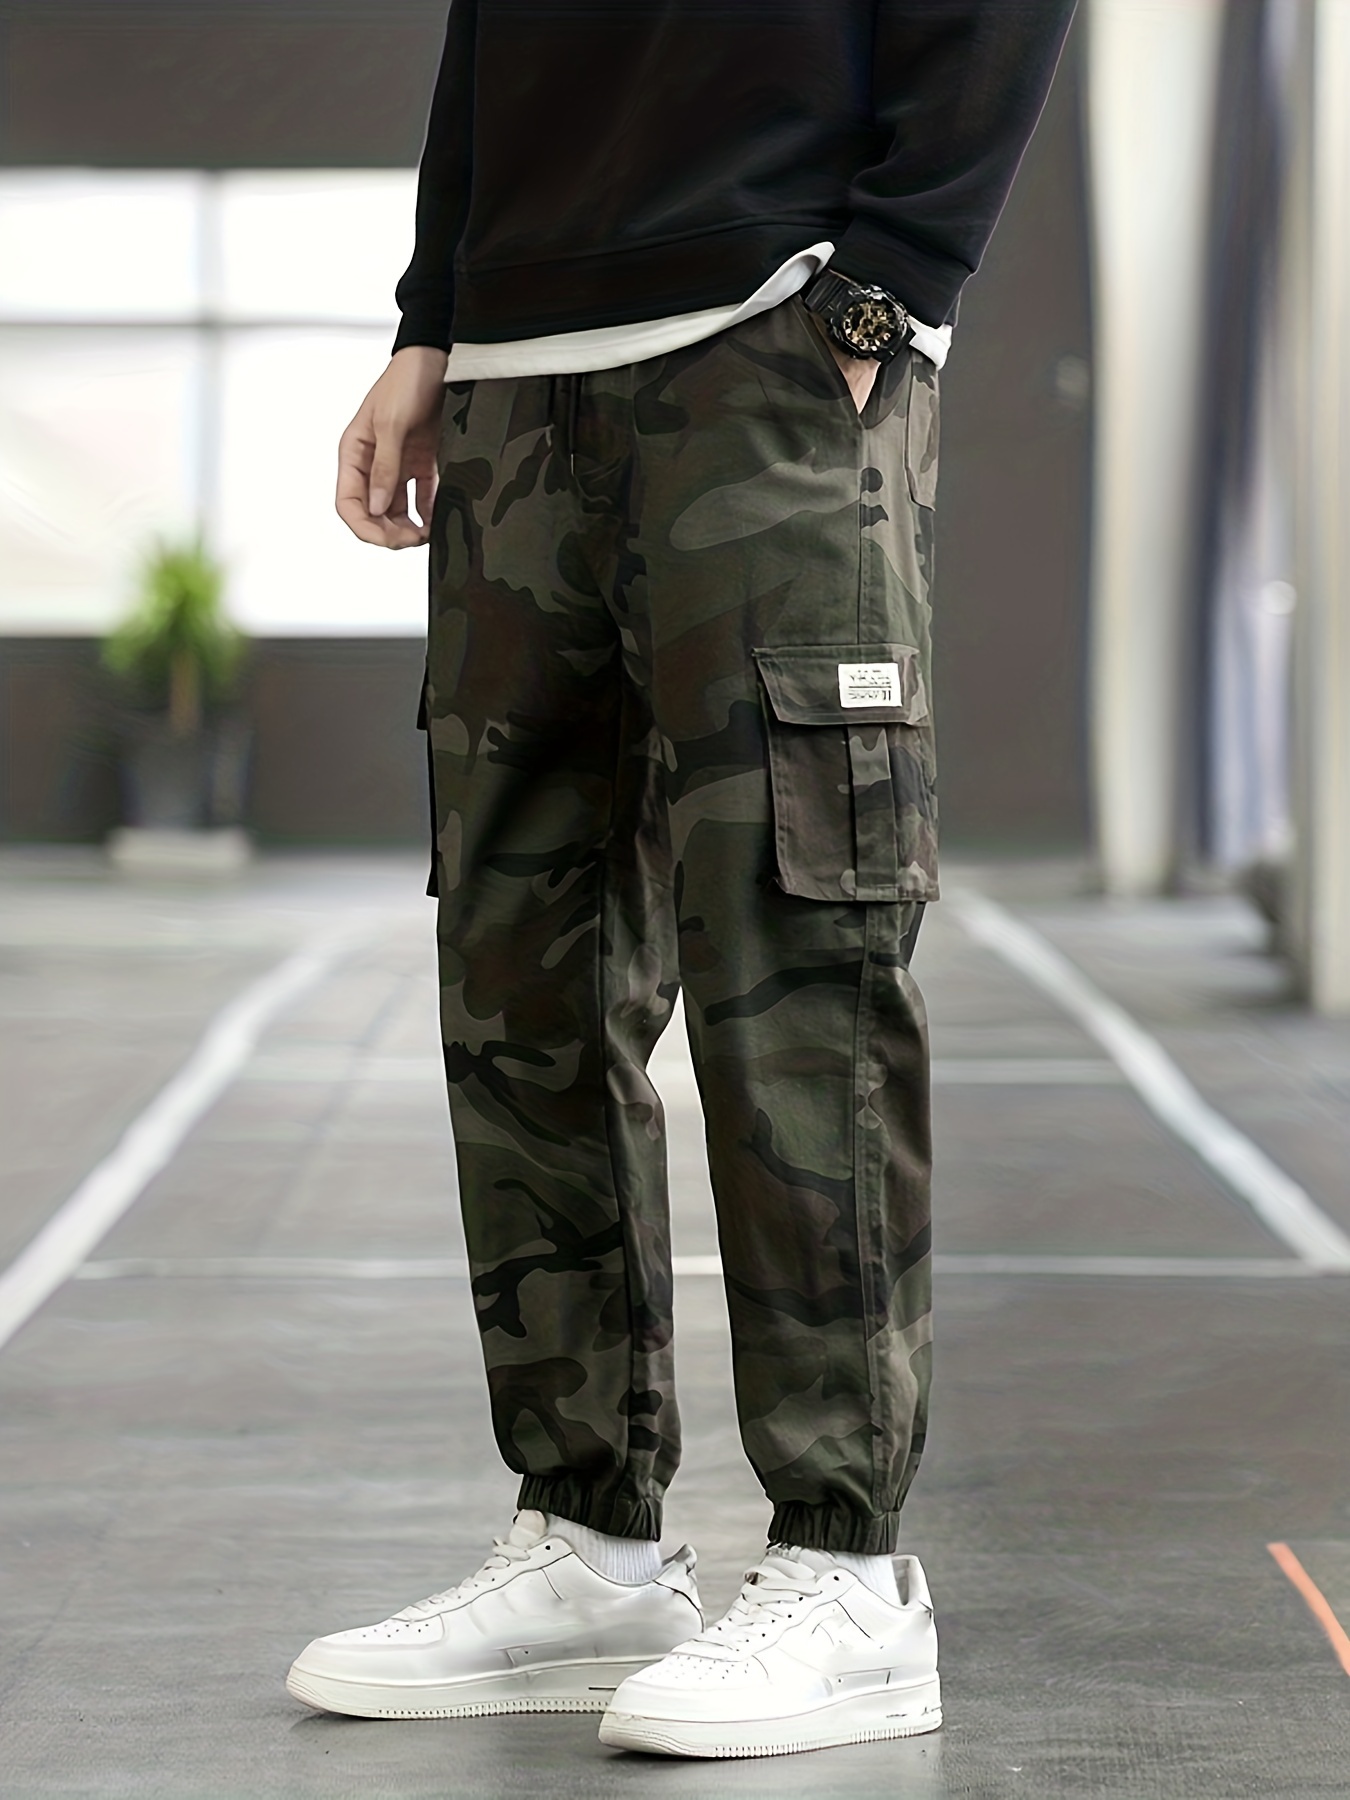 Estilo militar: Camuflaje en la moda masculina